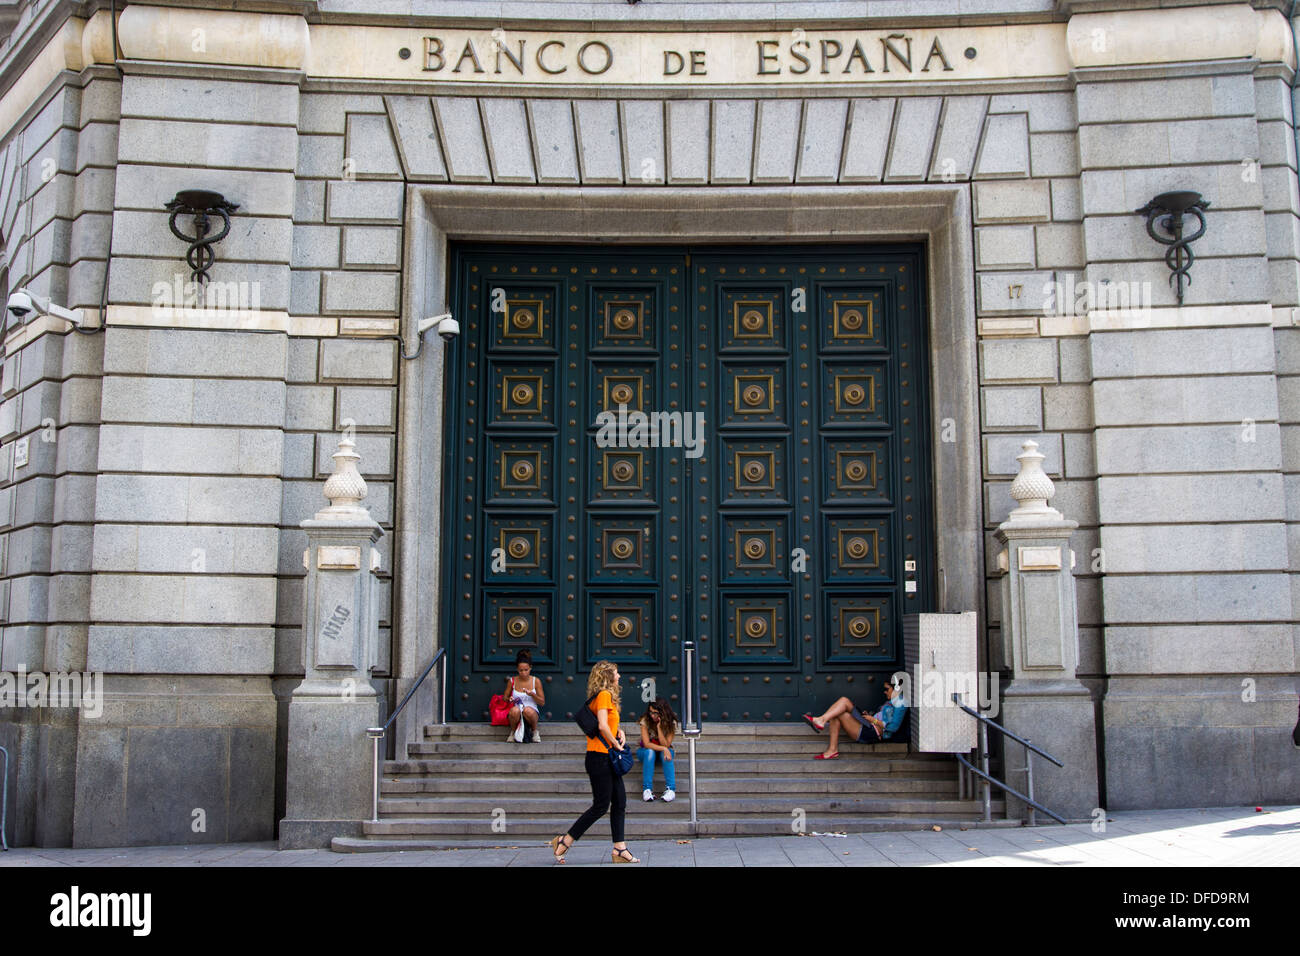 Banco de Espana Stock Photo